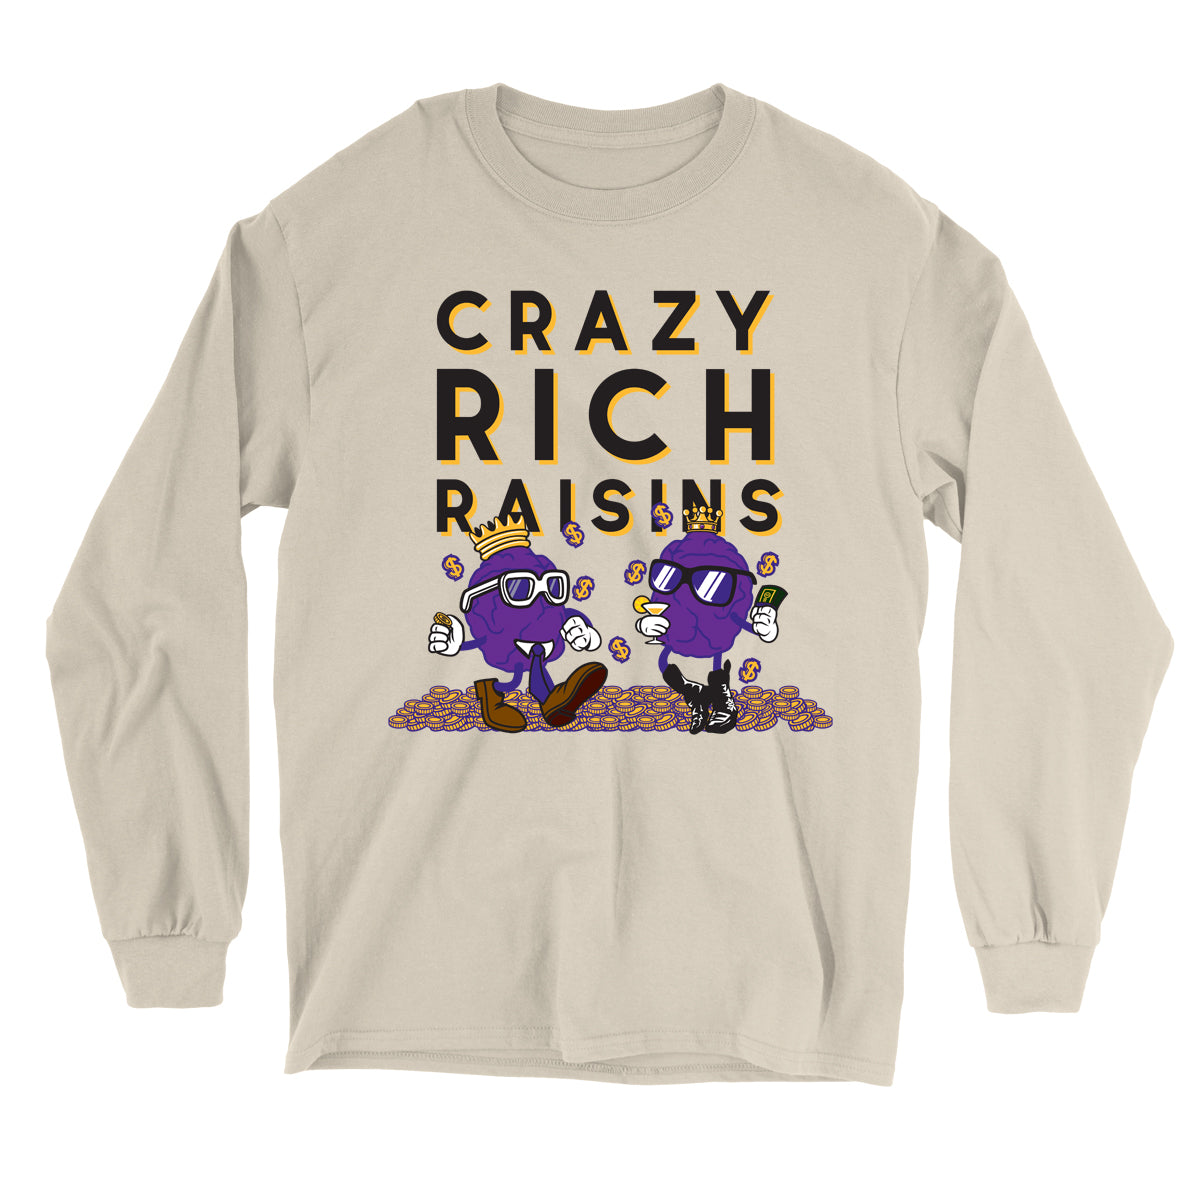 Movie The Food - Crazy Rich Raisins Longsleeve T-Shirt - Sand